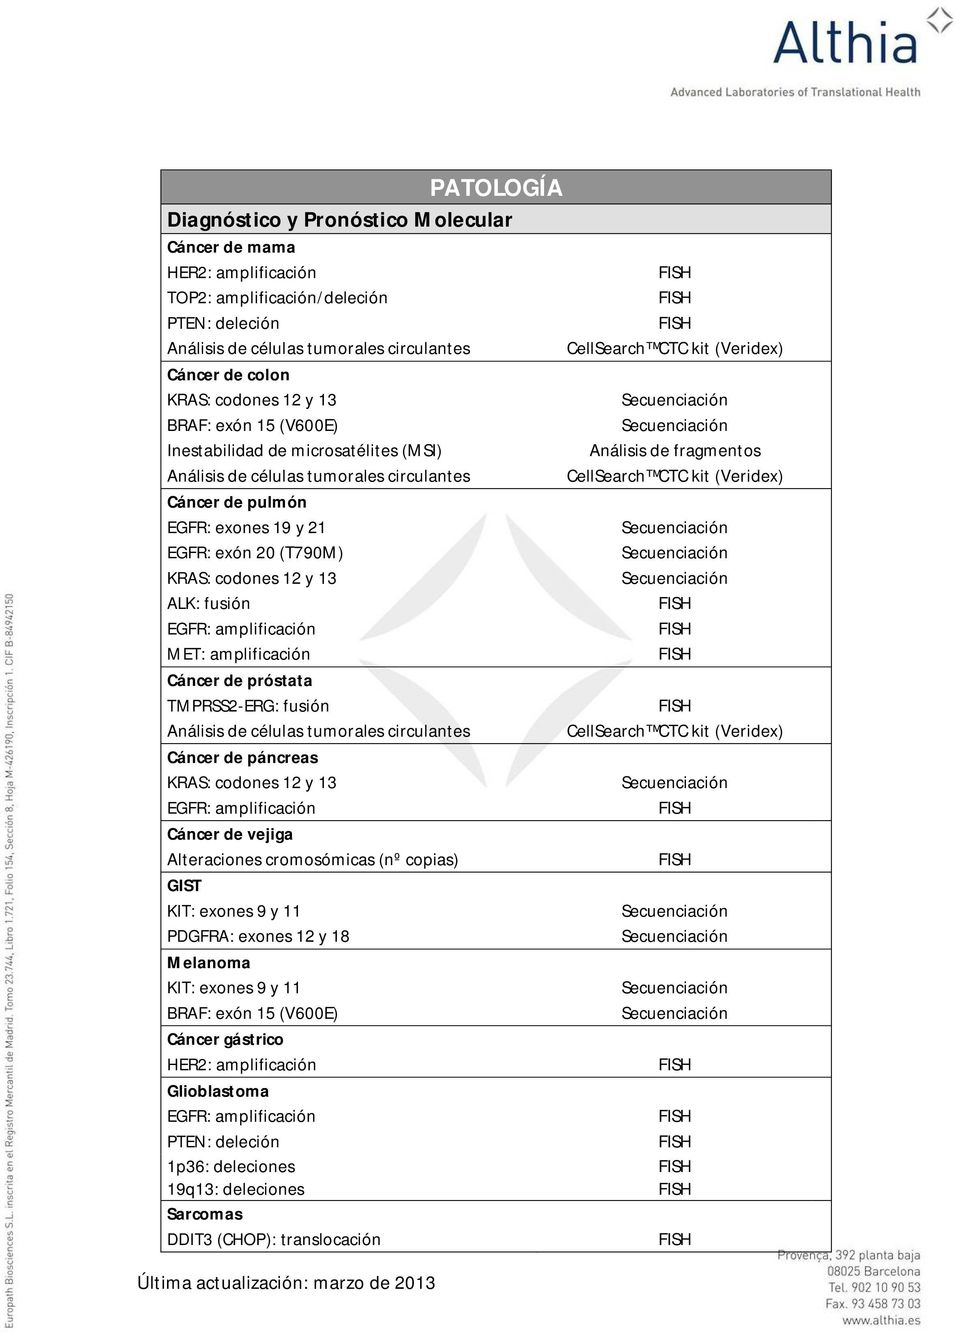 TMPRSS2-ERG: fusión Cáncer de páncreas Cáncer de vejiga Alteraciones cromosómicas (nº copias) GIST KIT: exones 9 y 11 PDGFRA: exones 12 y 18 Melanoma KIT: